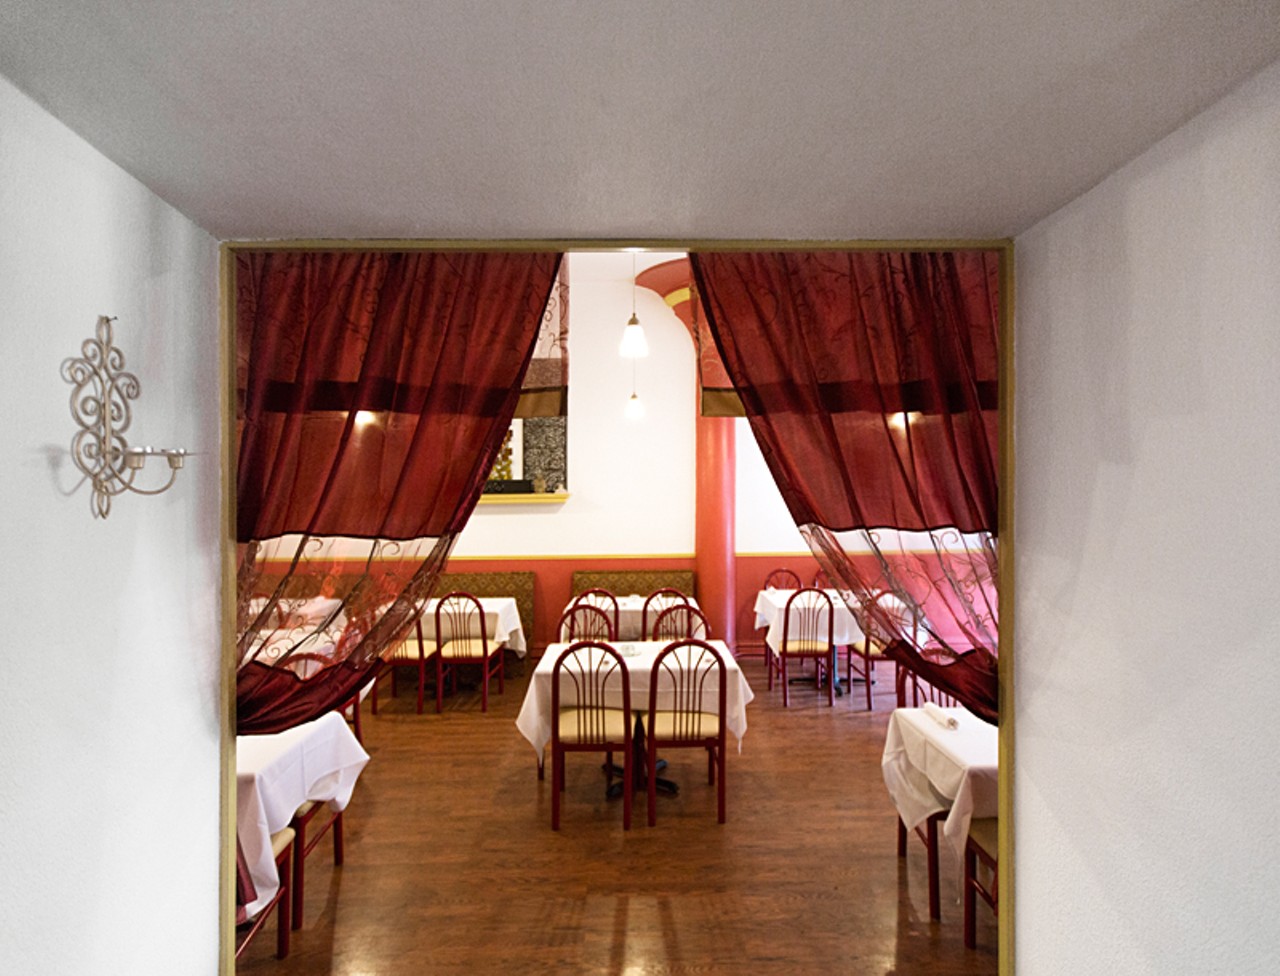 The dining room at Baida.